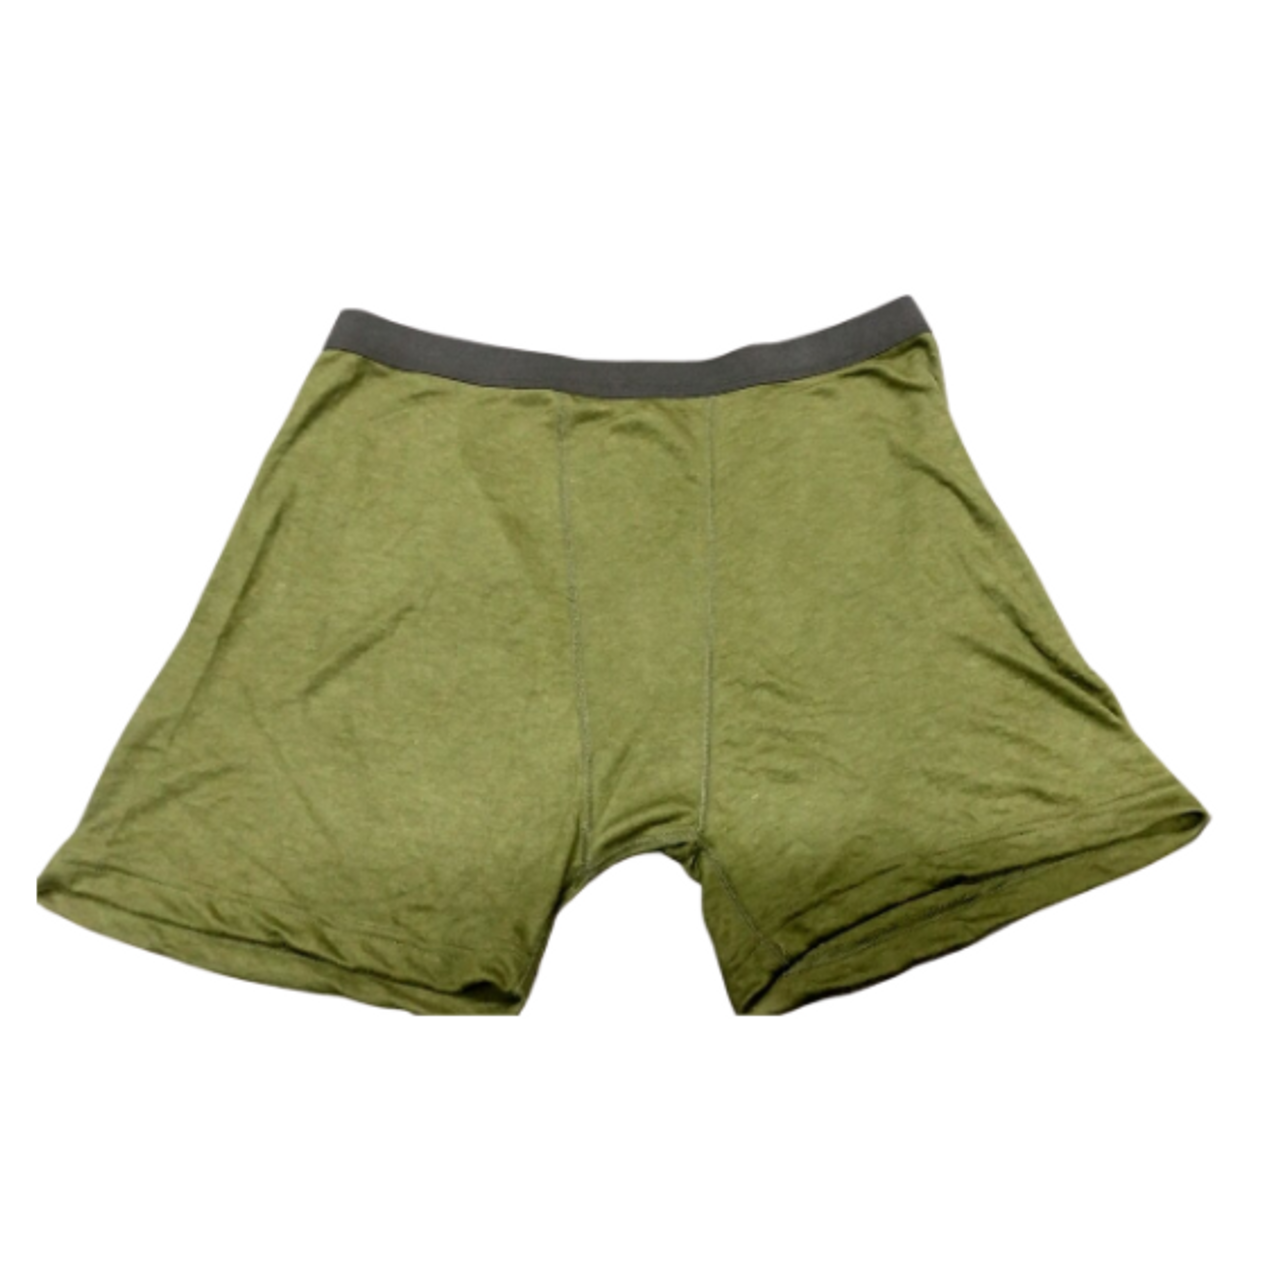 Aeronautica Militare Underwear  Accessories Bipack Short Cotton